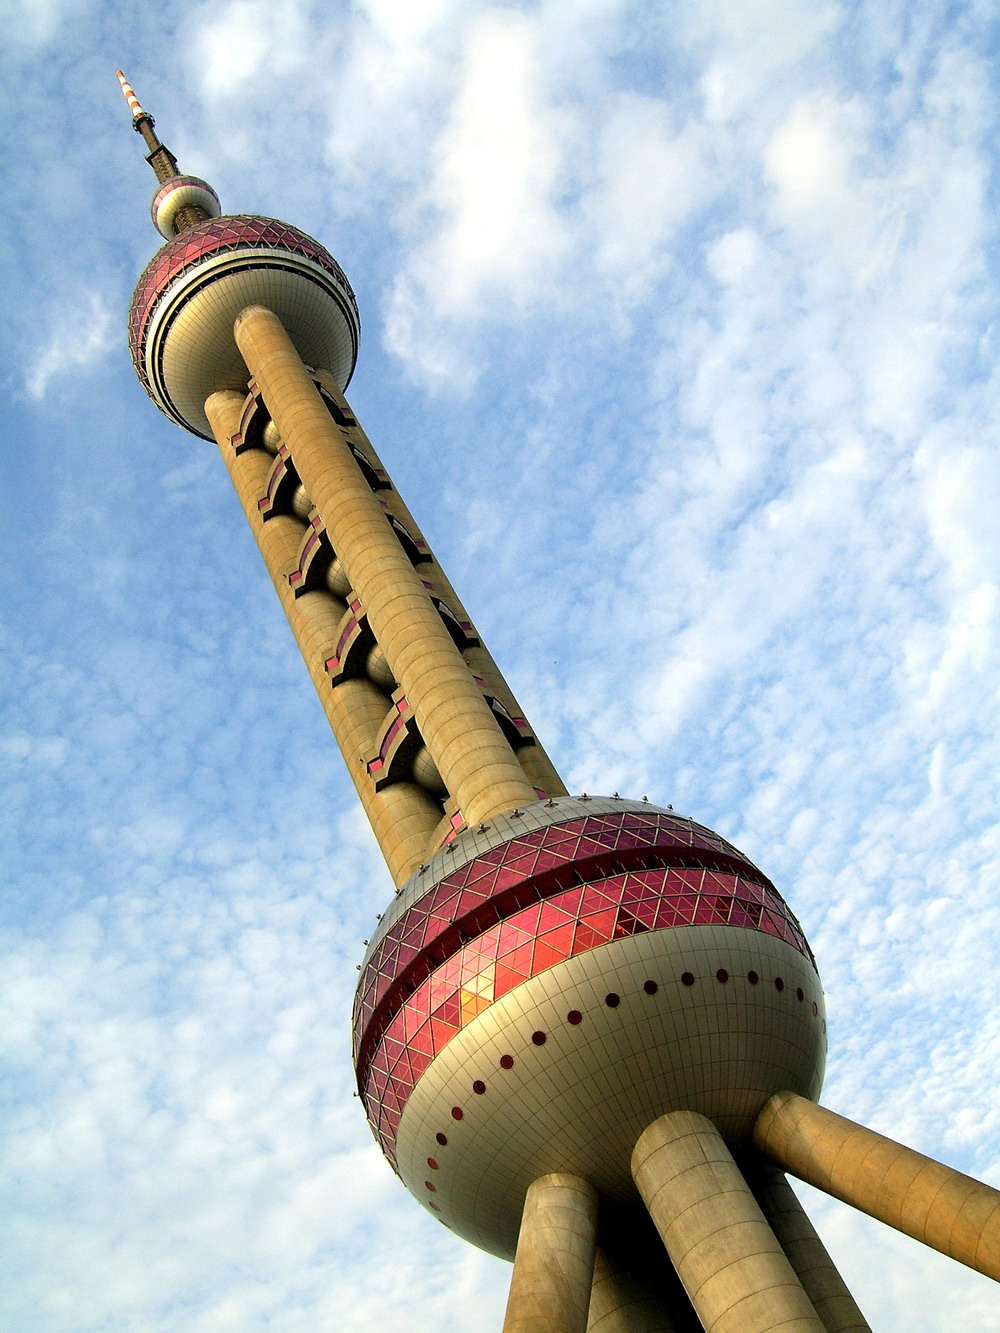 Шпиль Телебашни «Восточная жемчужина» (Oriental Pearl Tower), Шанхай, КНР